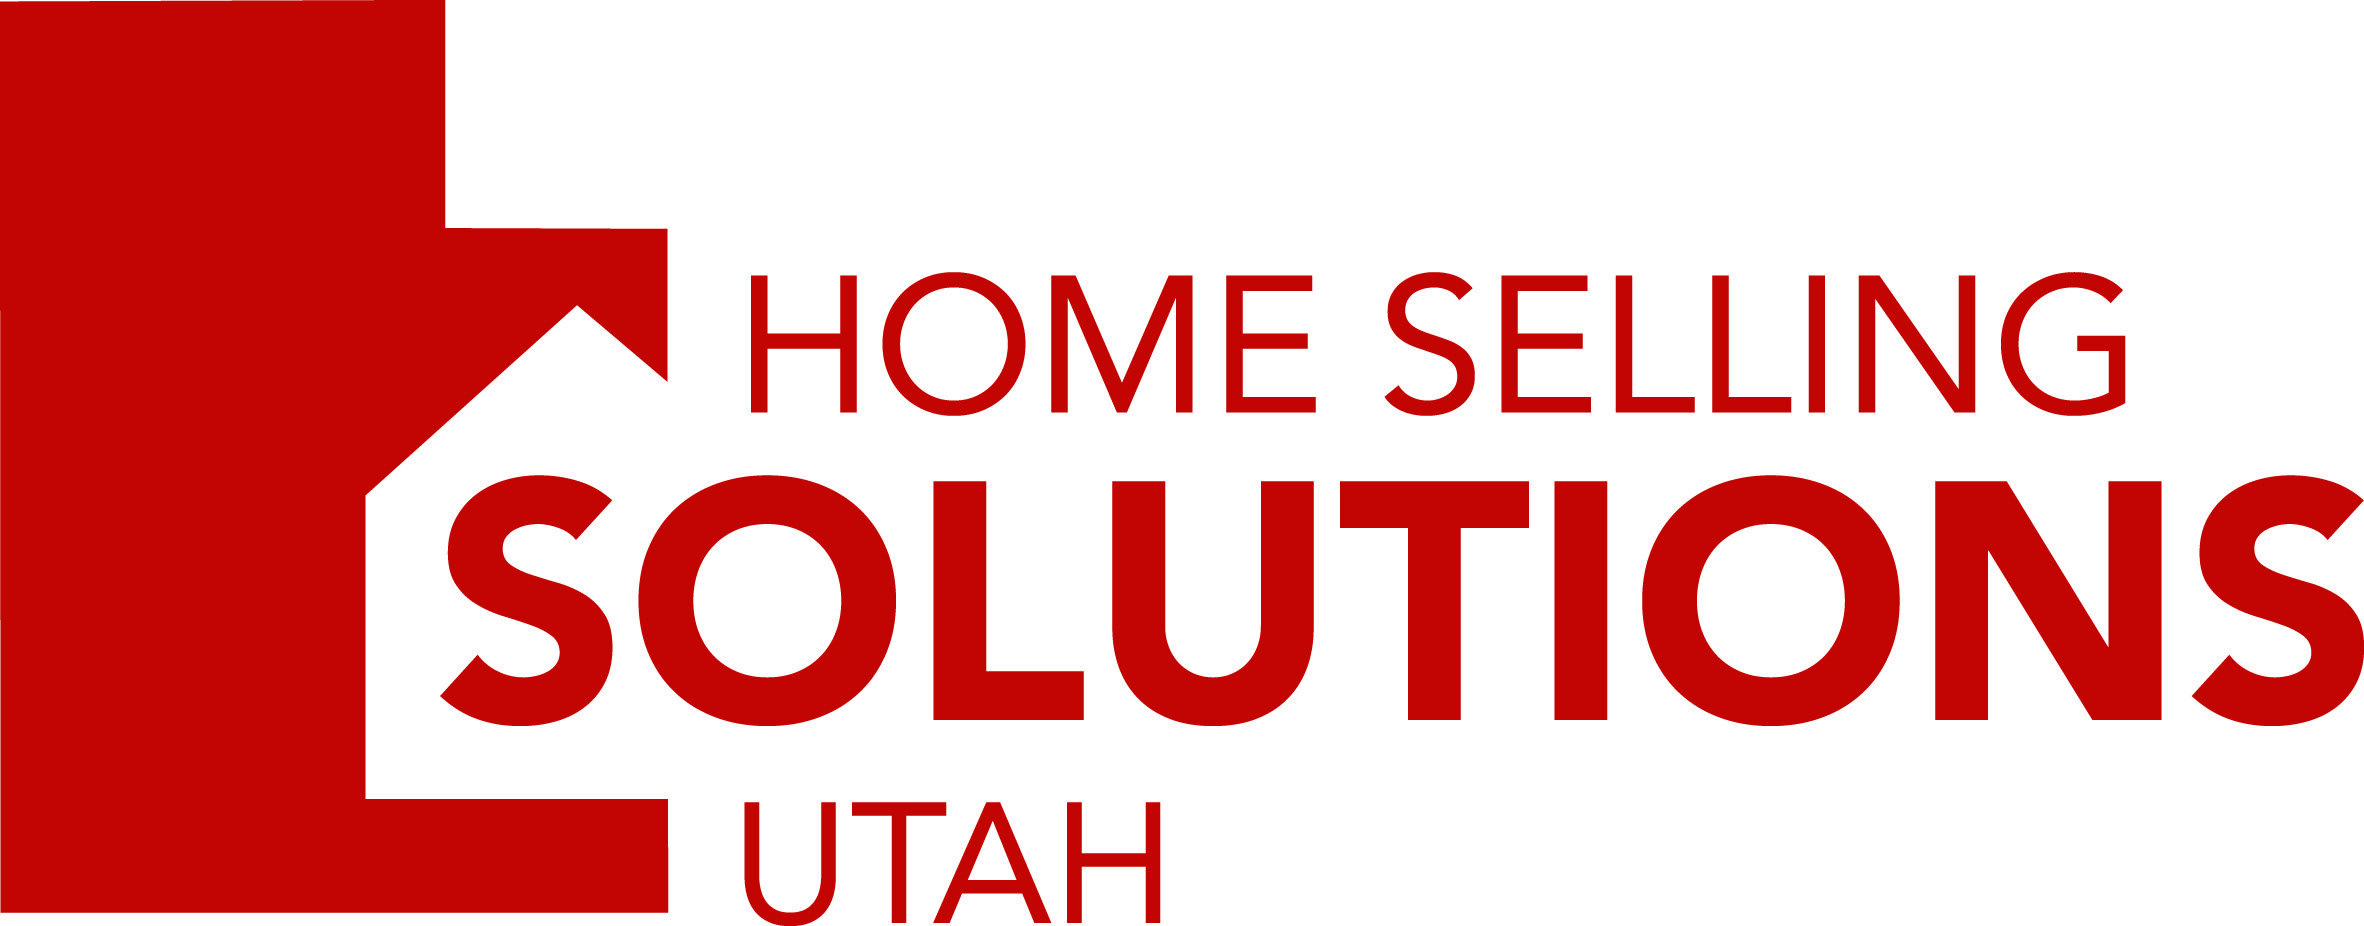 Home Selling Solutions Utah logo